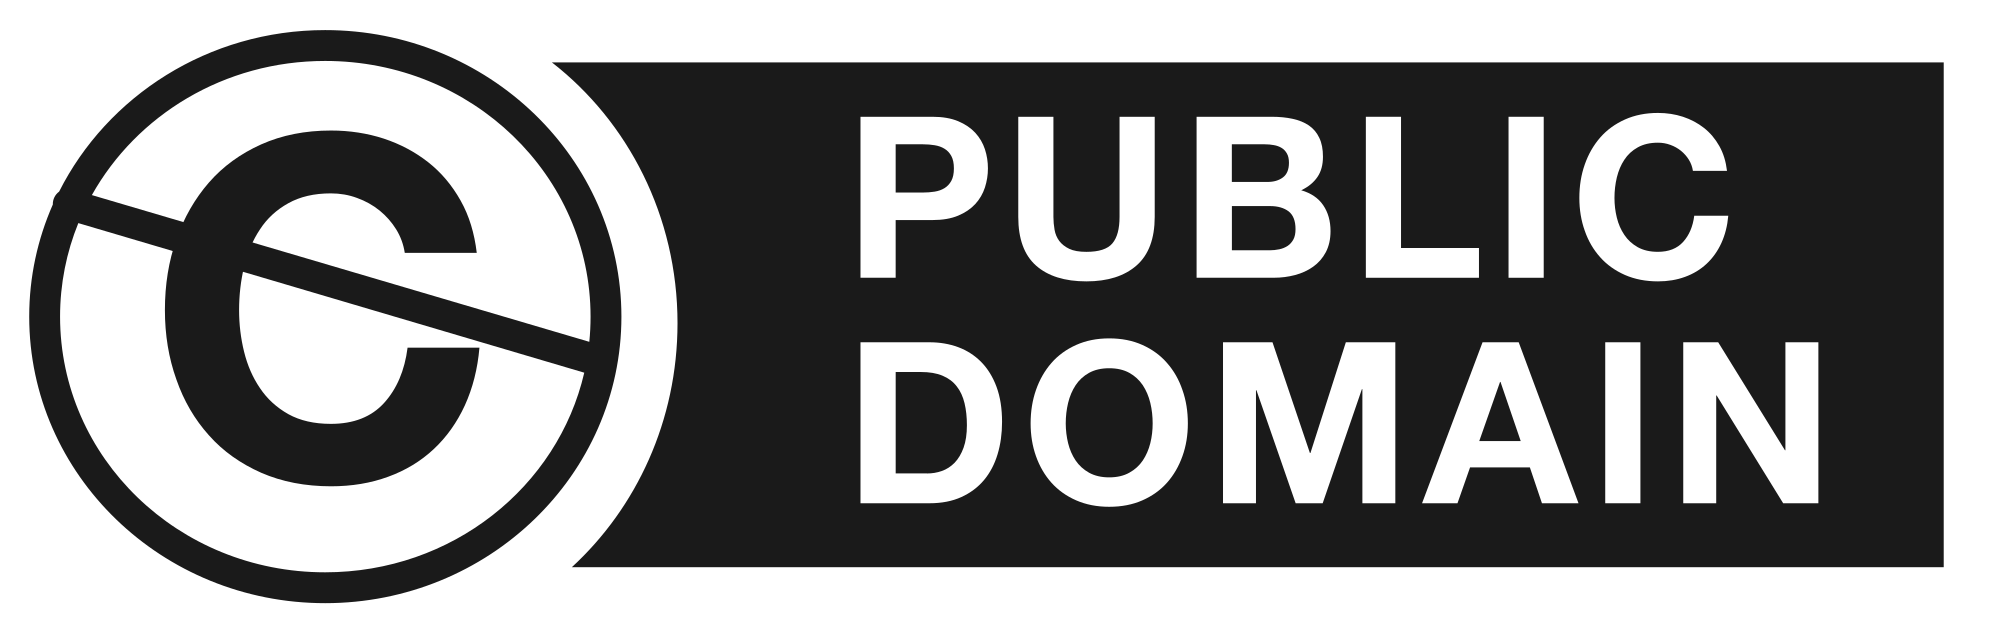 Public Domain logo - Openclipart